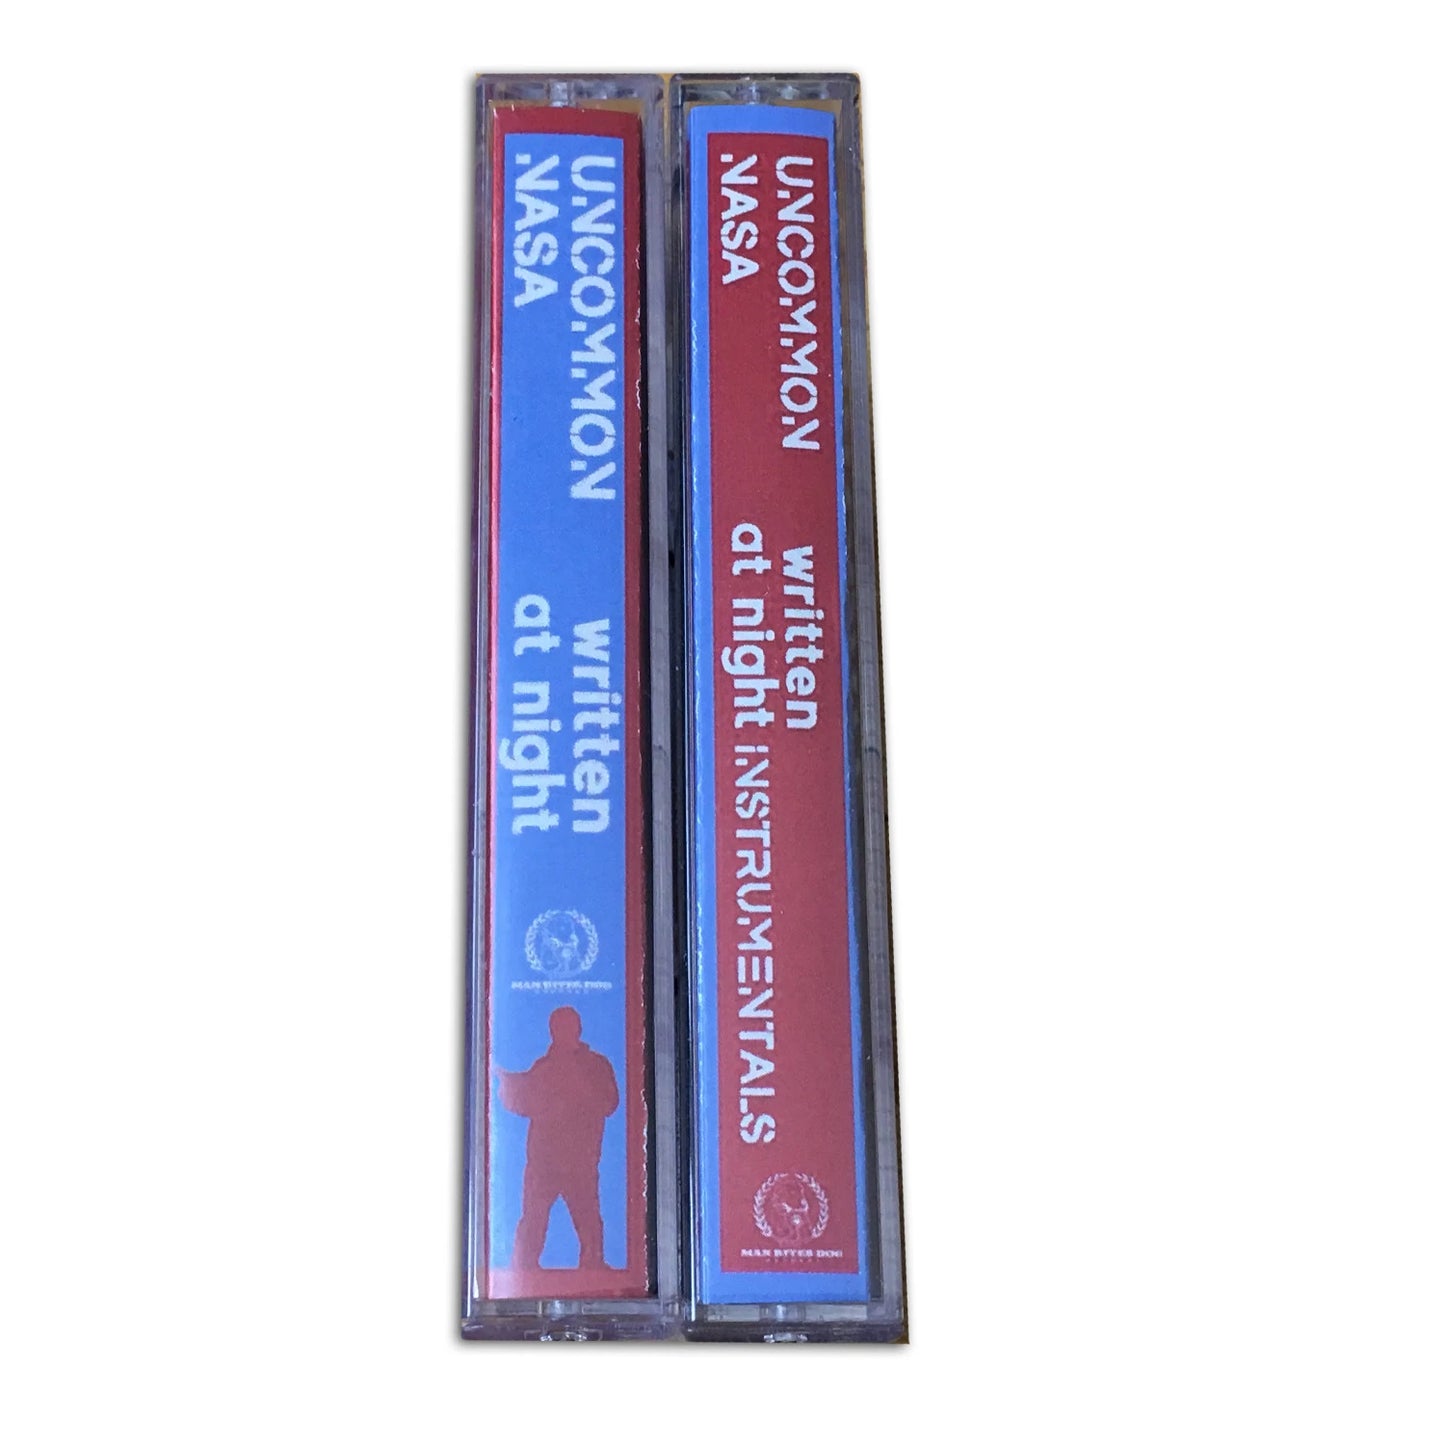 Uncommon Nasa: Written at Night - Cassette Bundle